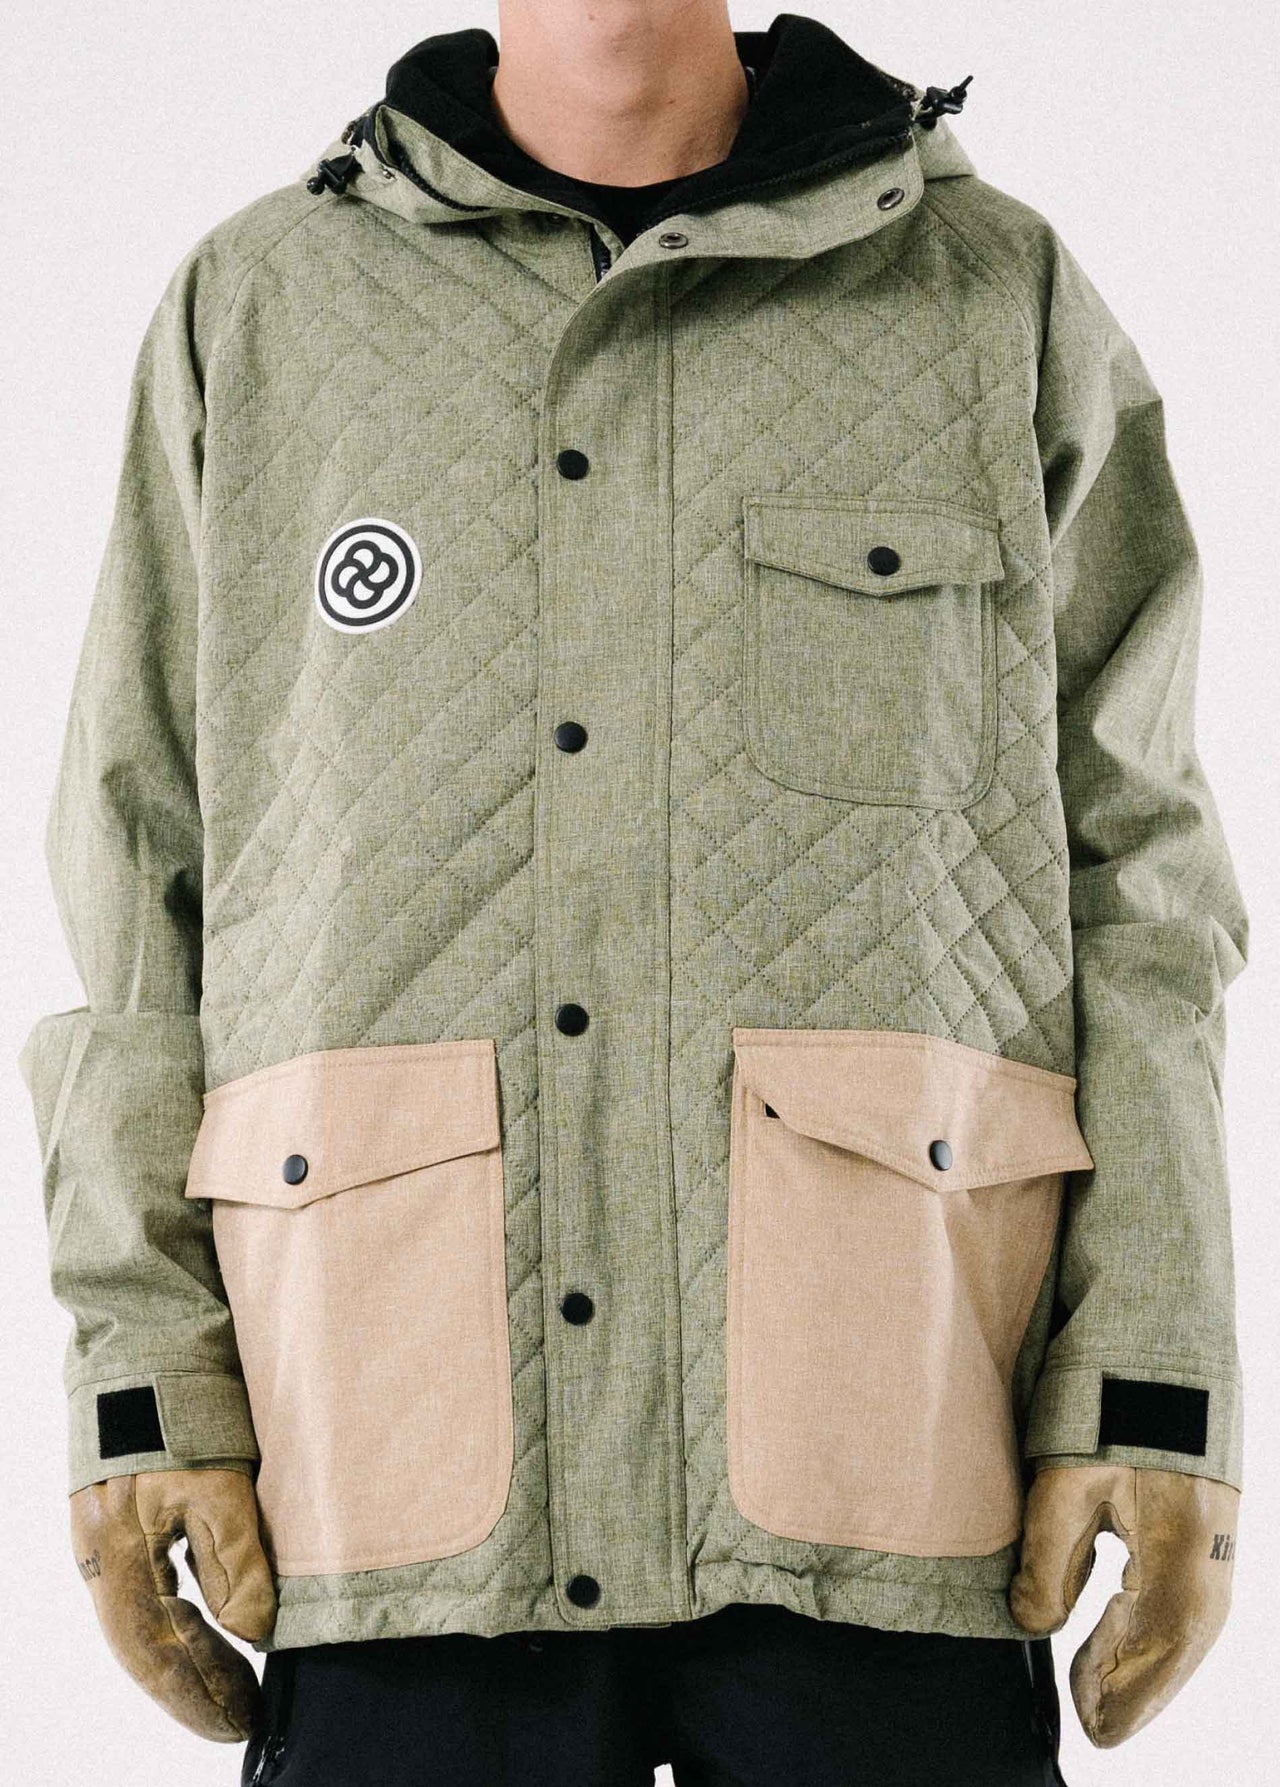 Mens Insulated Waterproof Ski Jacket Green - Bloom Outerwear